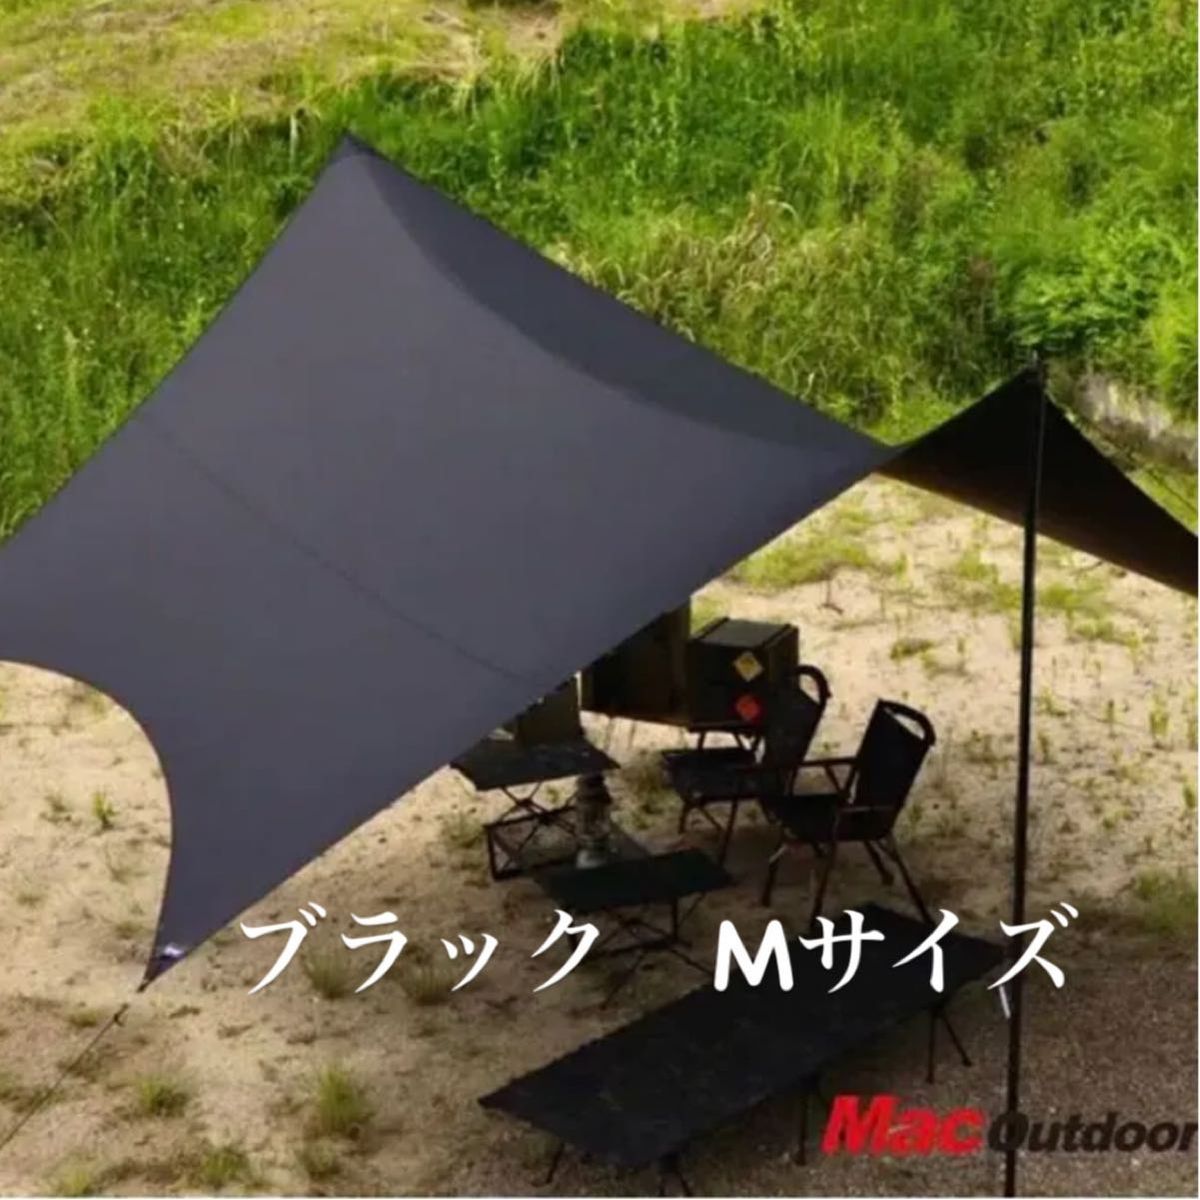 Mac outdoor Macone camphills 別注タープ Sサイズ 超特価激安 www.m